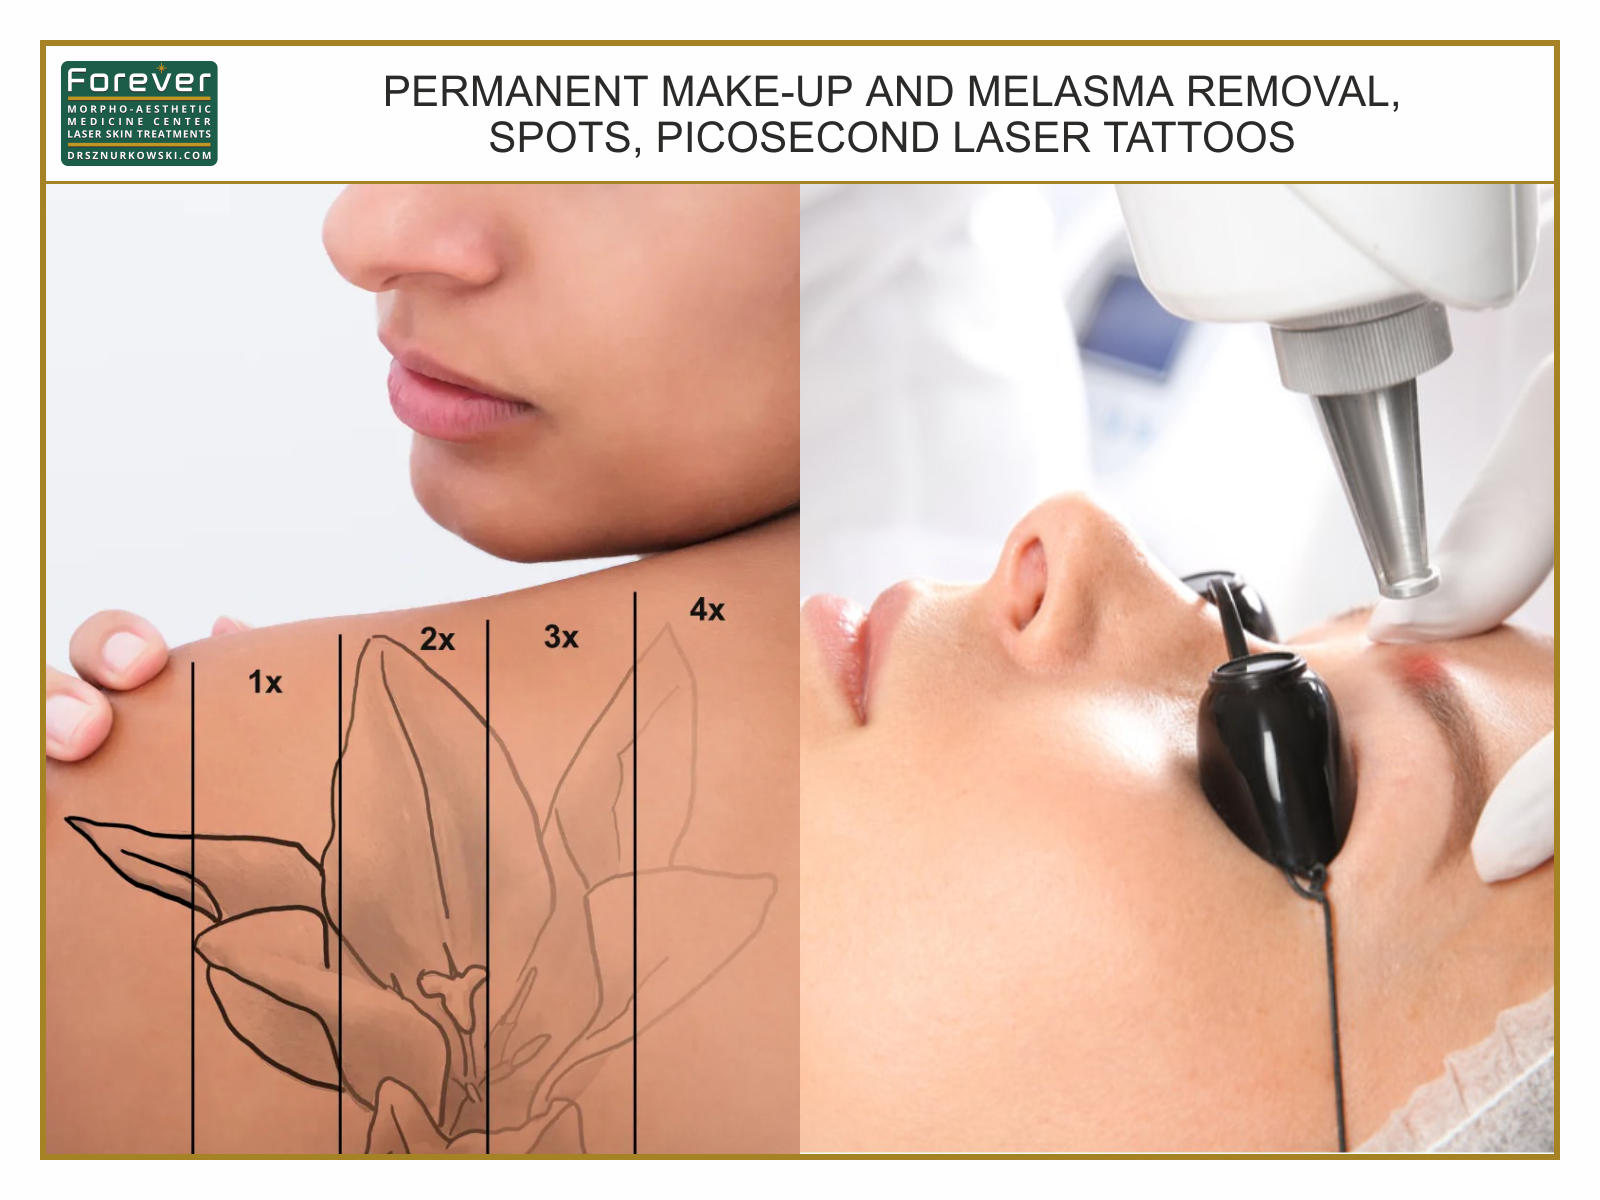 Permanent Make-up and Melasma Removal, Spots 1 (80x60) EN.jpg